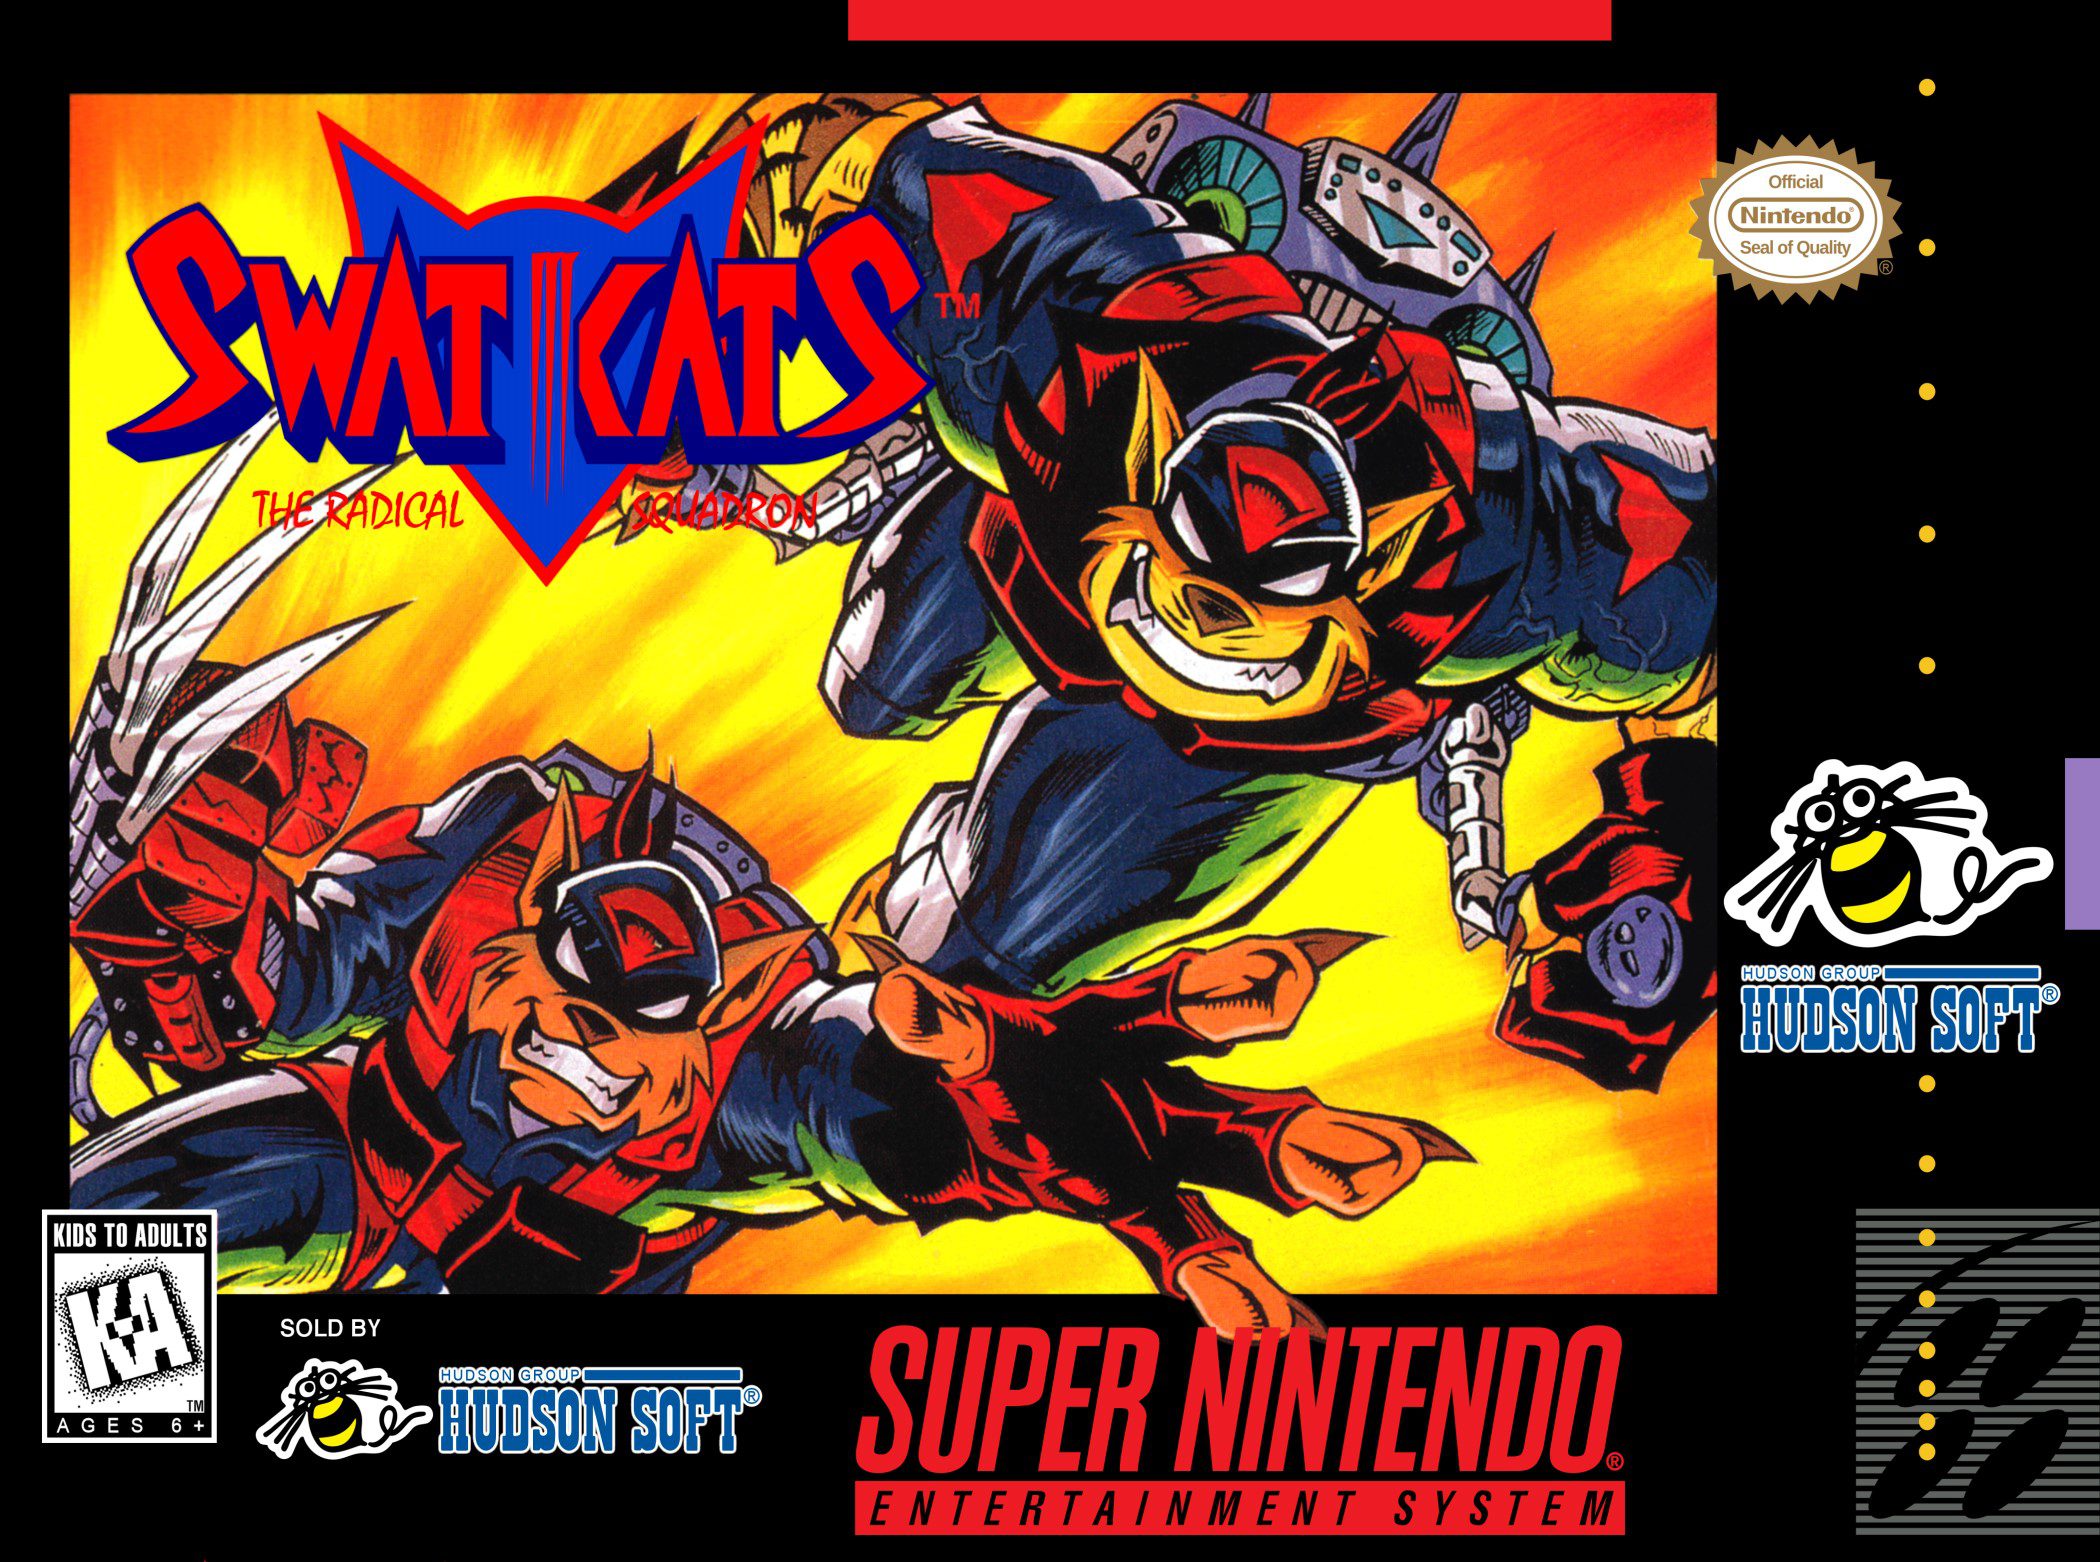 SWAT Kats for Super Nintendo Entertainment System (SNES)